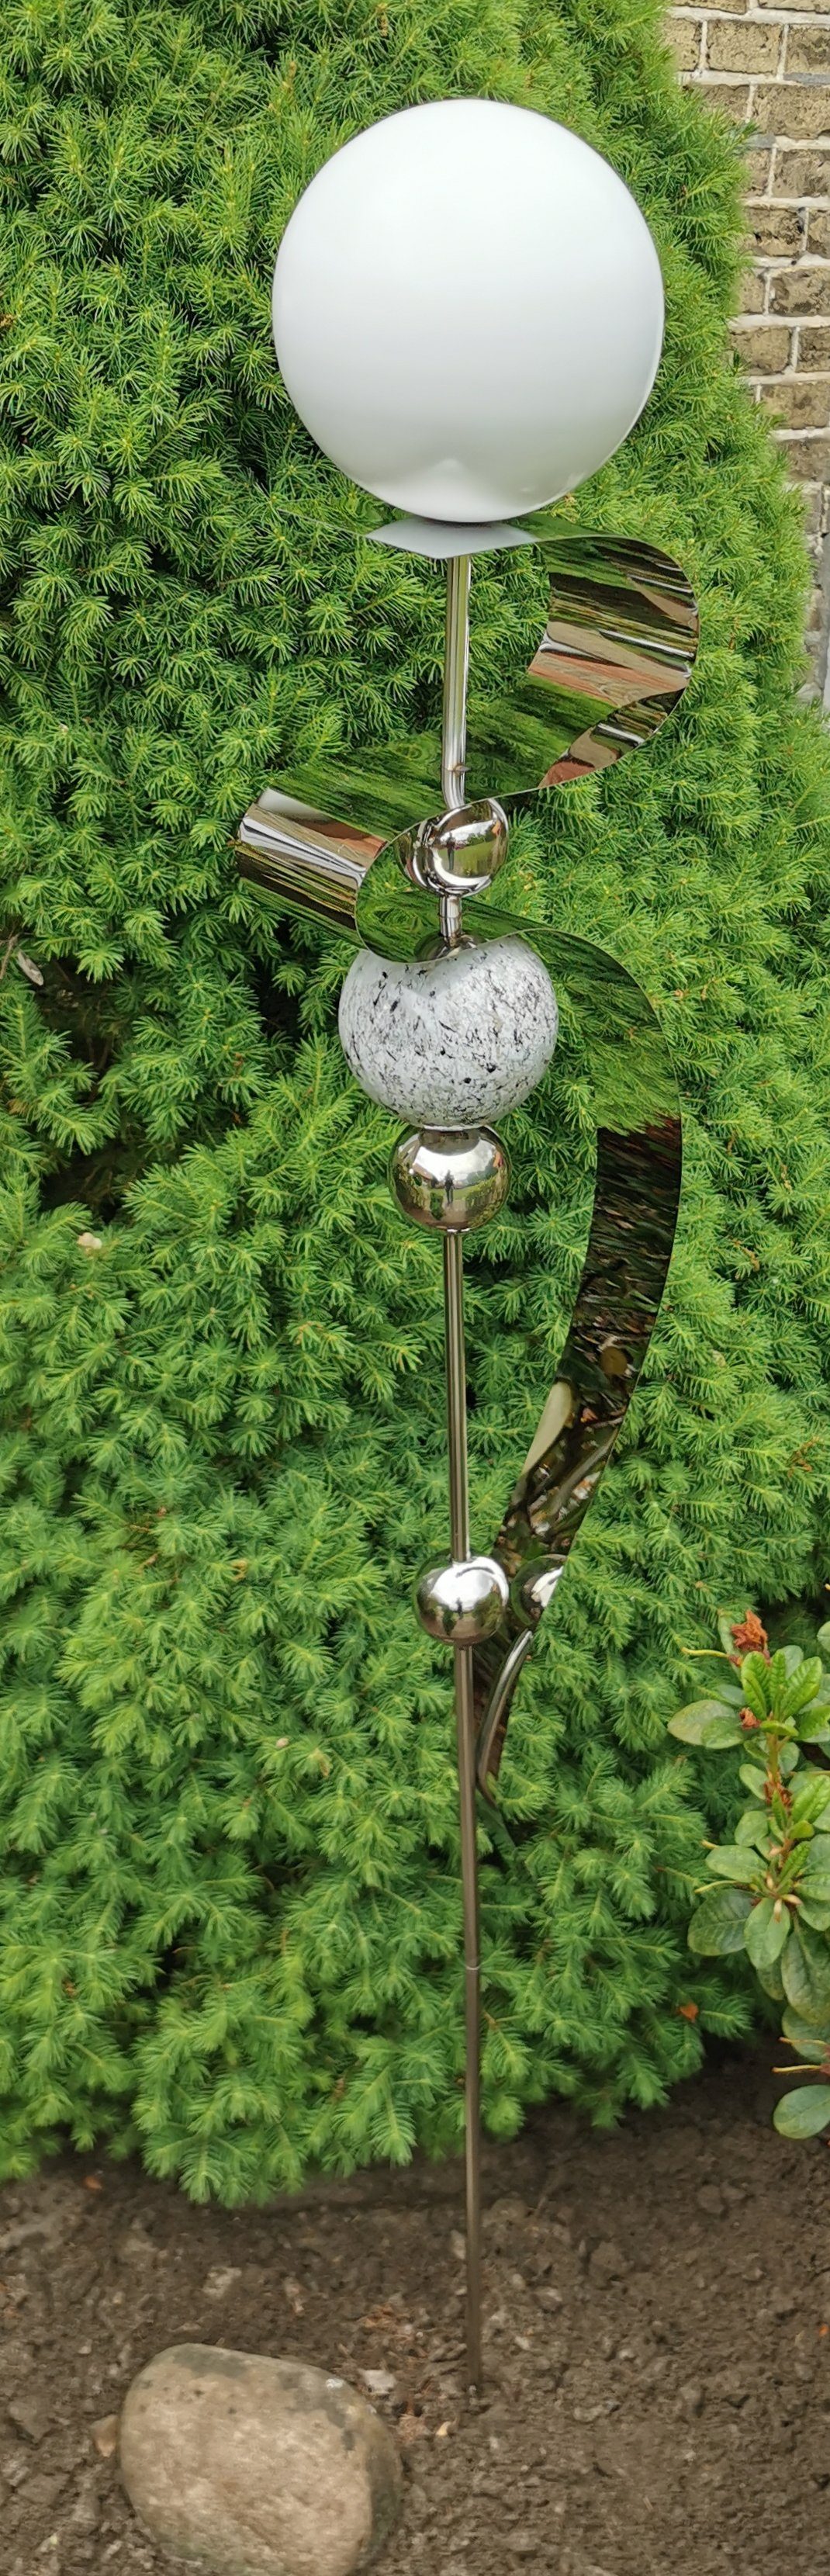 Jürgen Bocker Garten-Ambiente Gartenstecker Skulptur matt Saturn 160 weiß Edelstahl cm Beetstecker Kugel